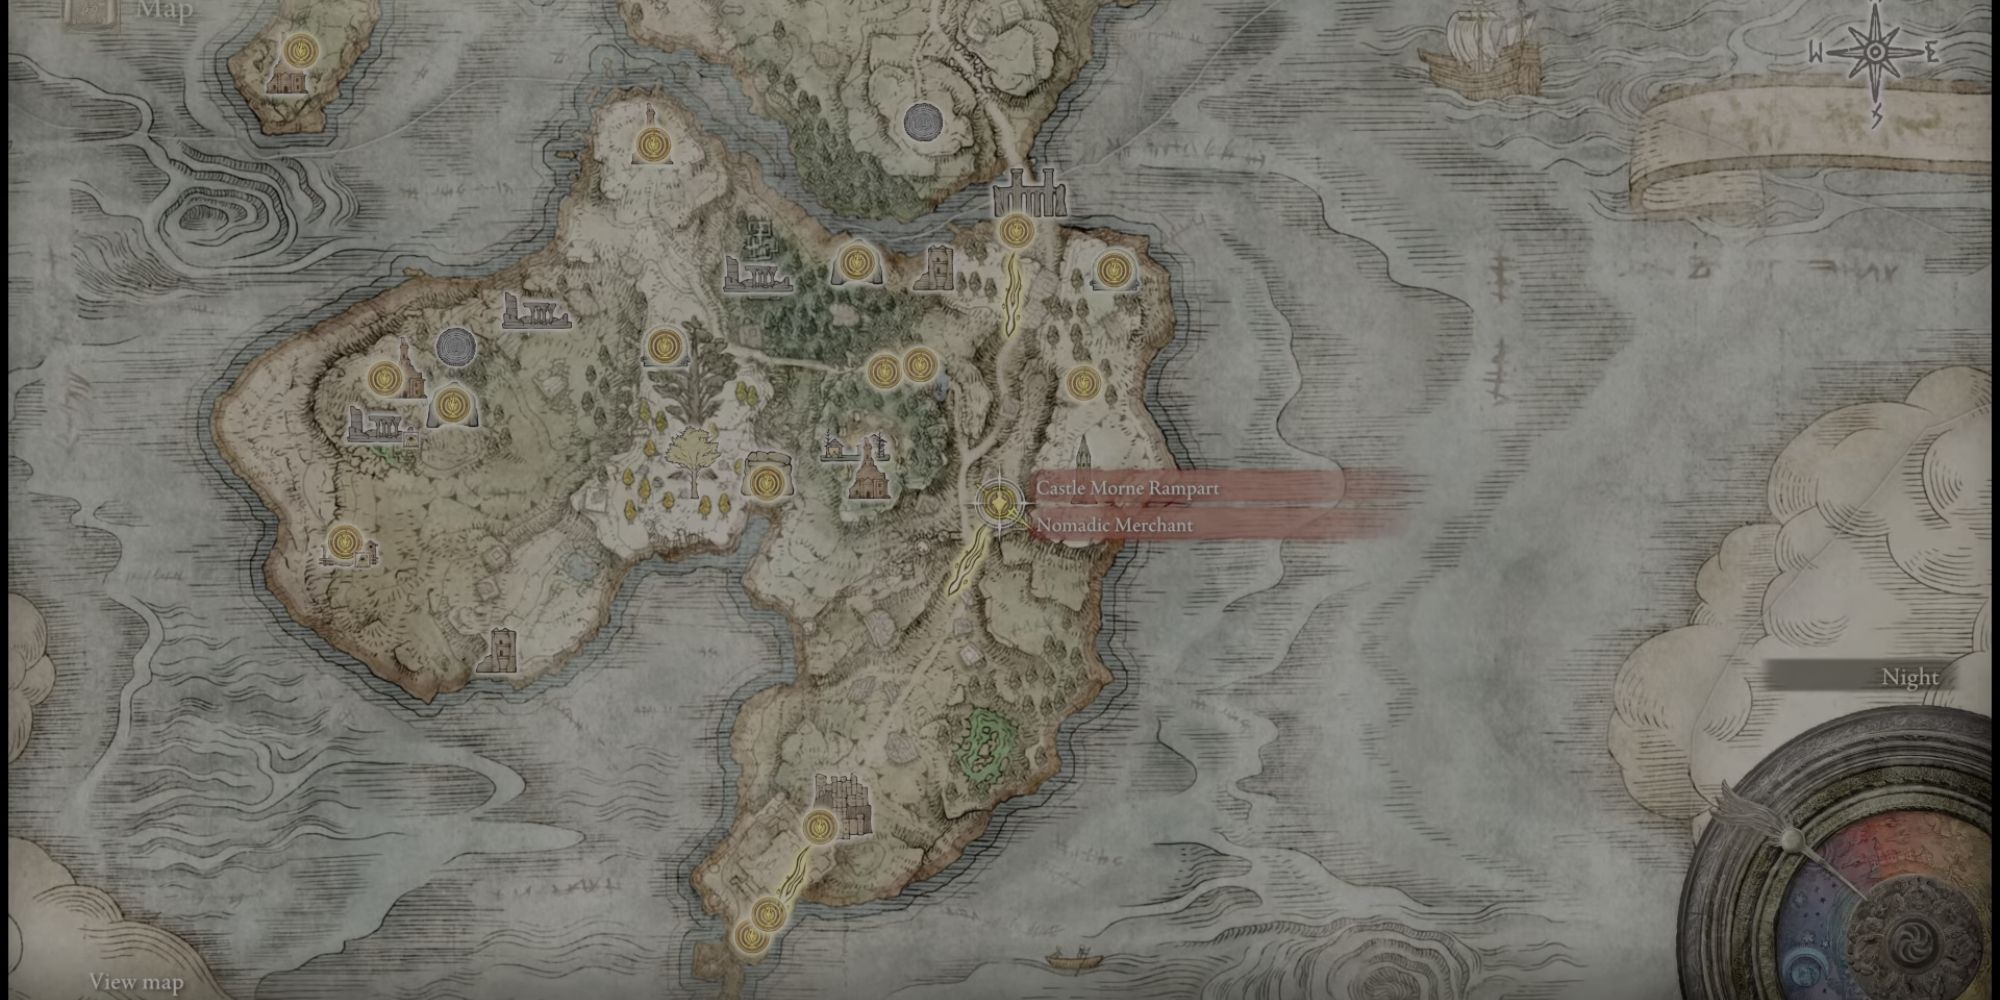 Castle Morne Rampart / Nomadic Merchant Site of Grace on the elden ring map